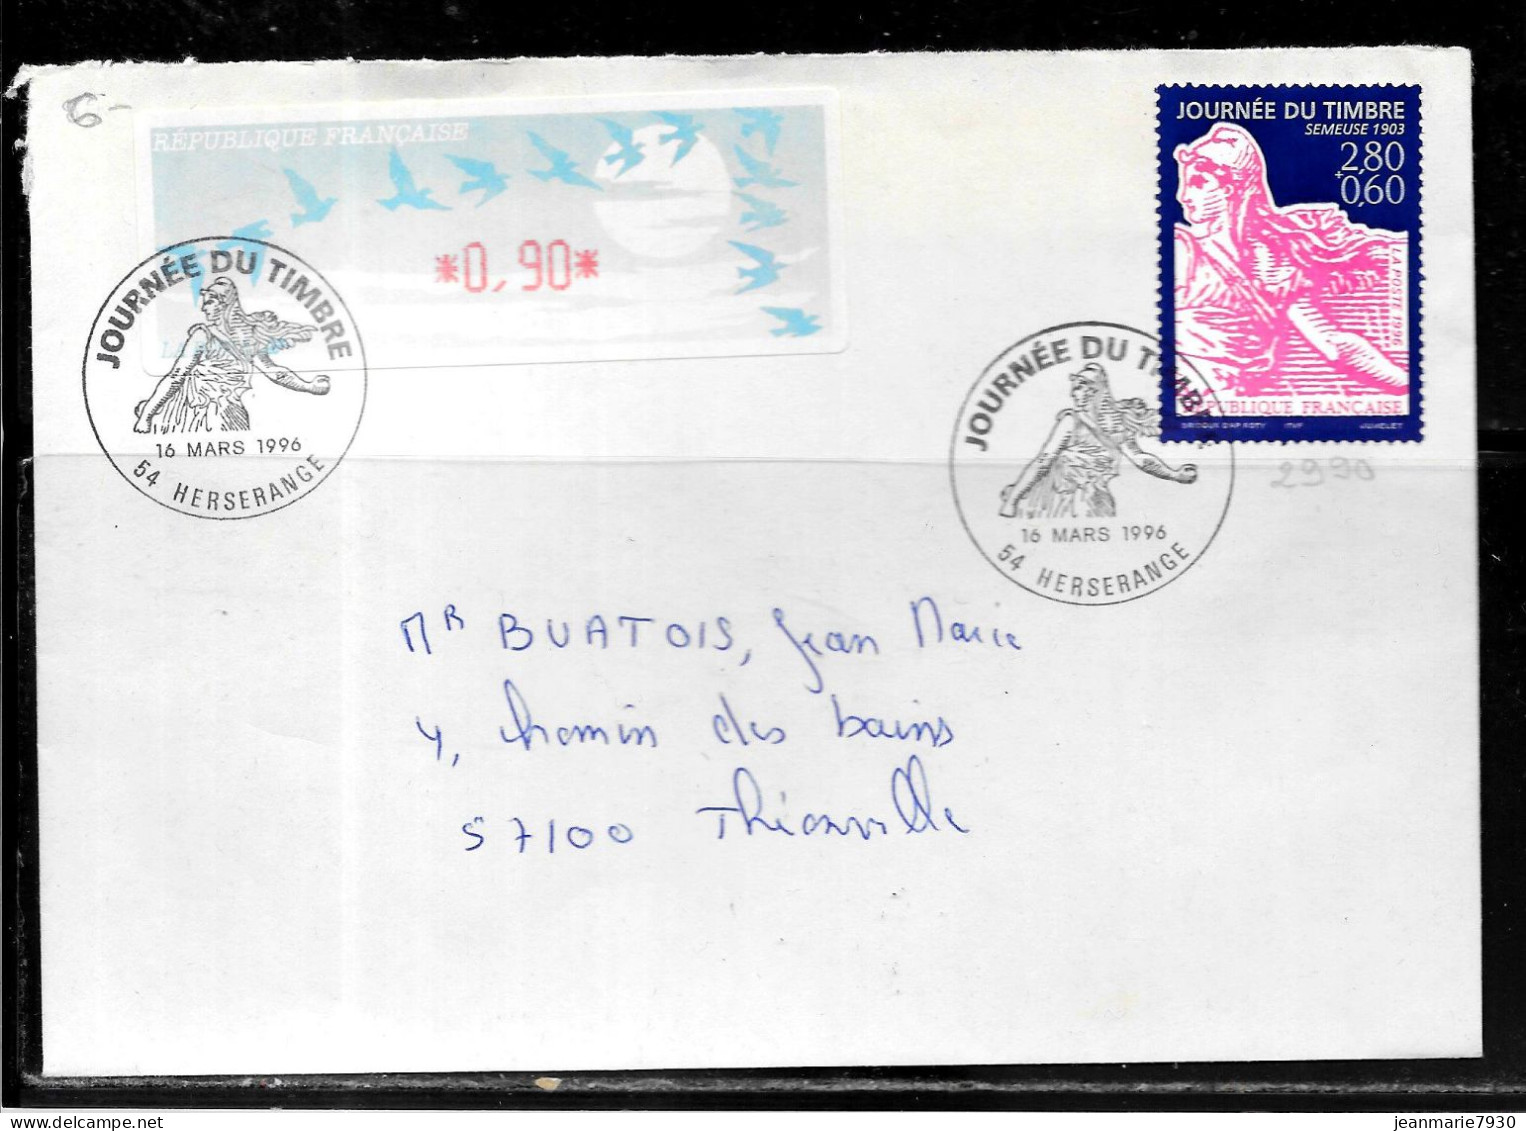 K178 - N° 2990 SUR LETTRE DE HERSERANGE DU 16/03/96 - JOURNEE DU TIMBRE - VIGNETTE D'AFFRANCHISSEMENT 0.90 Fr - Commemorative Postmarks